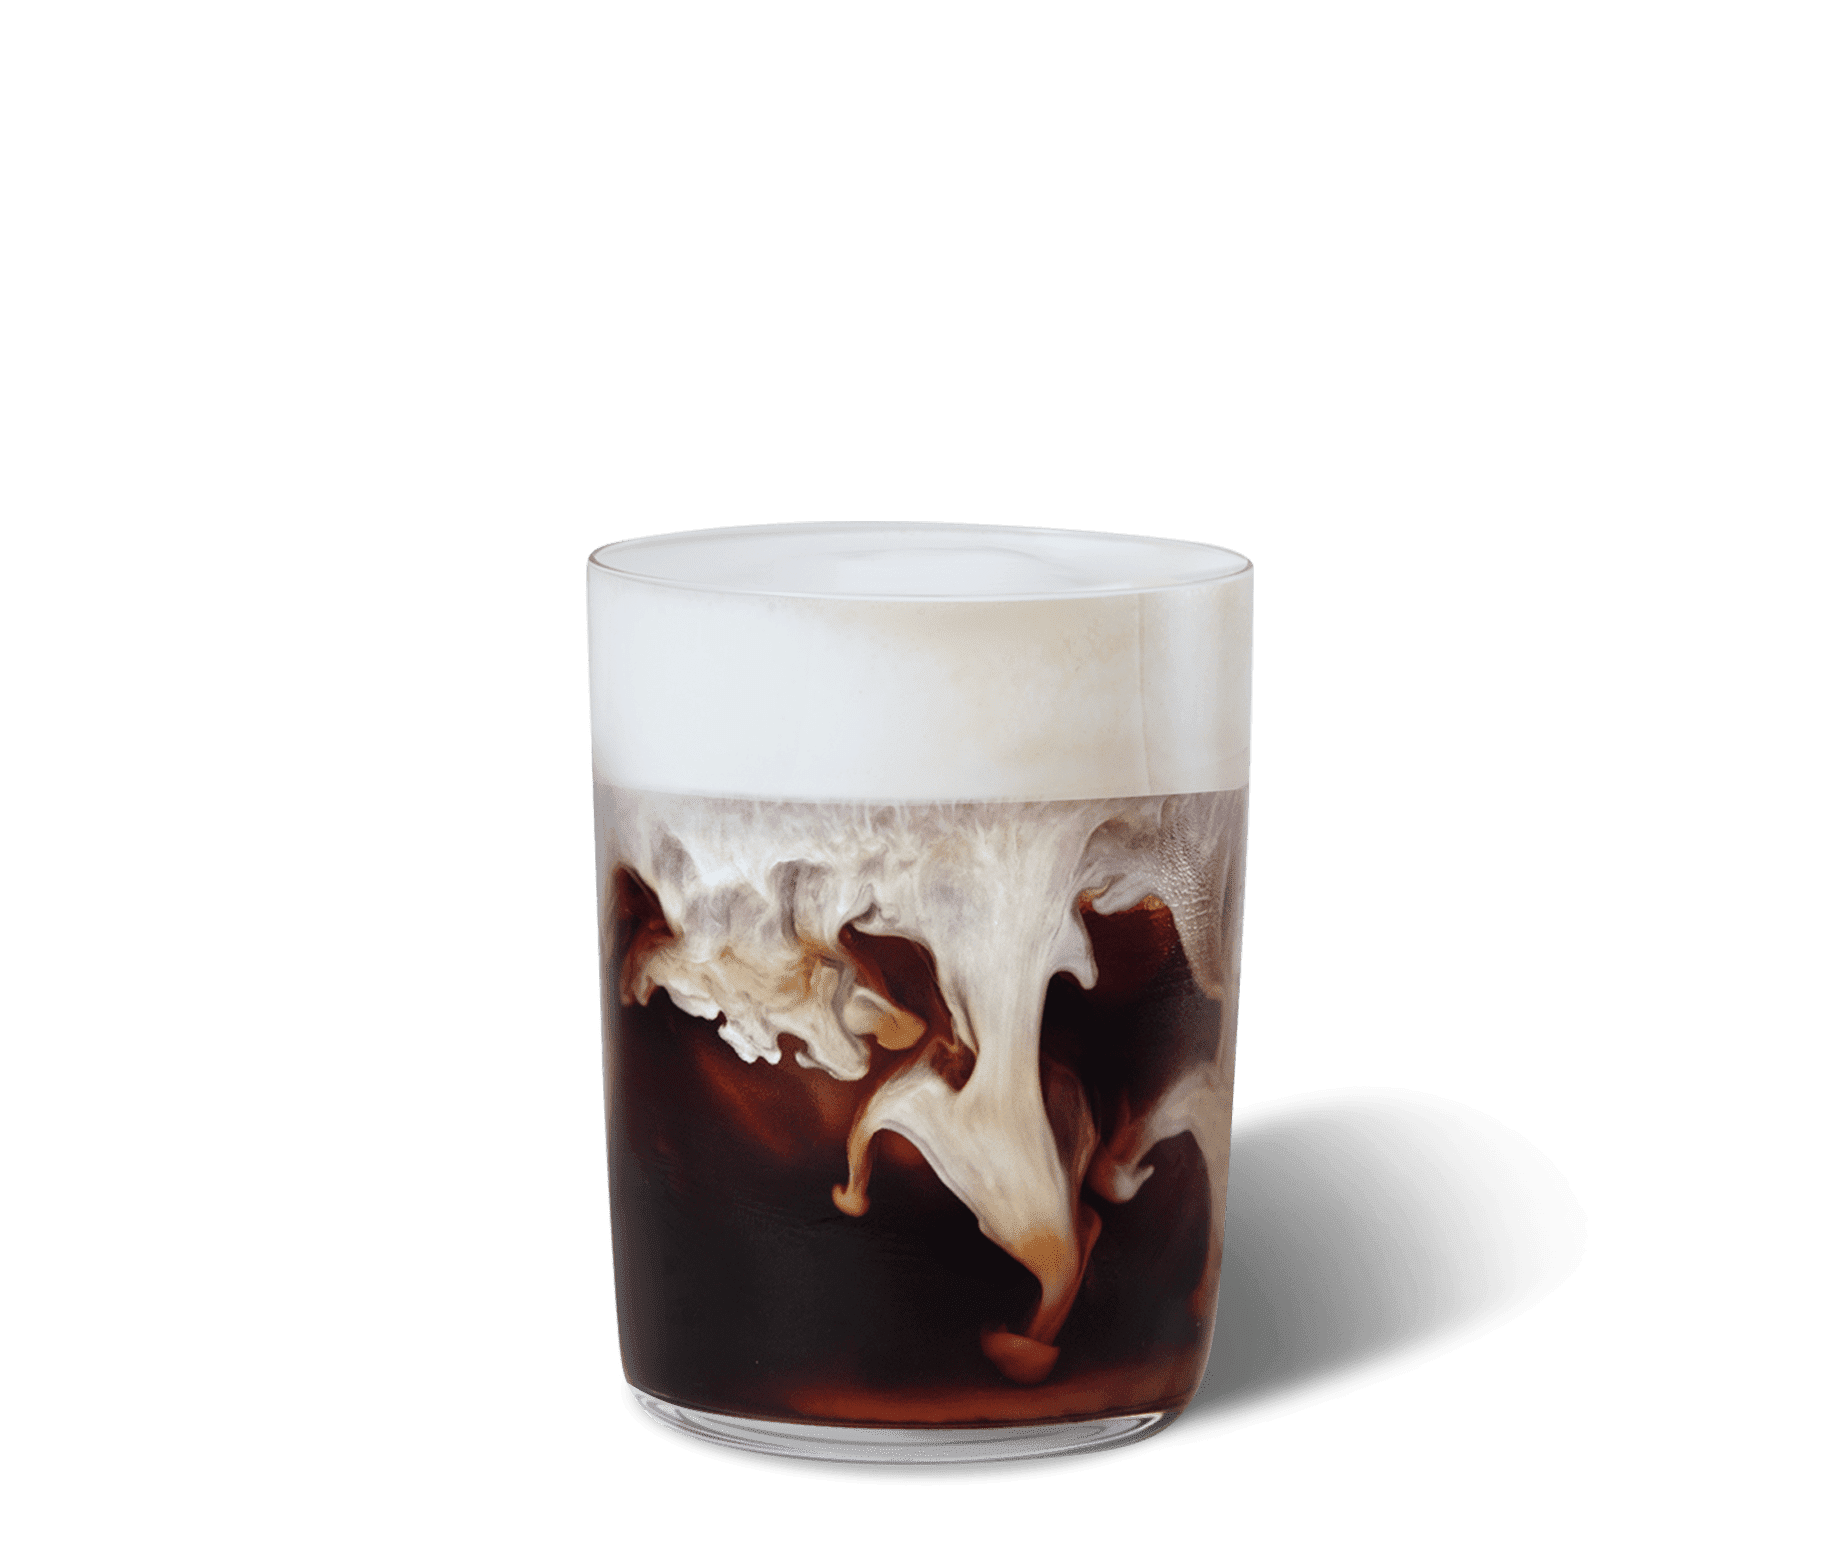 Iced Caramel Latte & Vanille creme